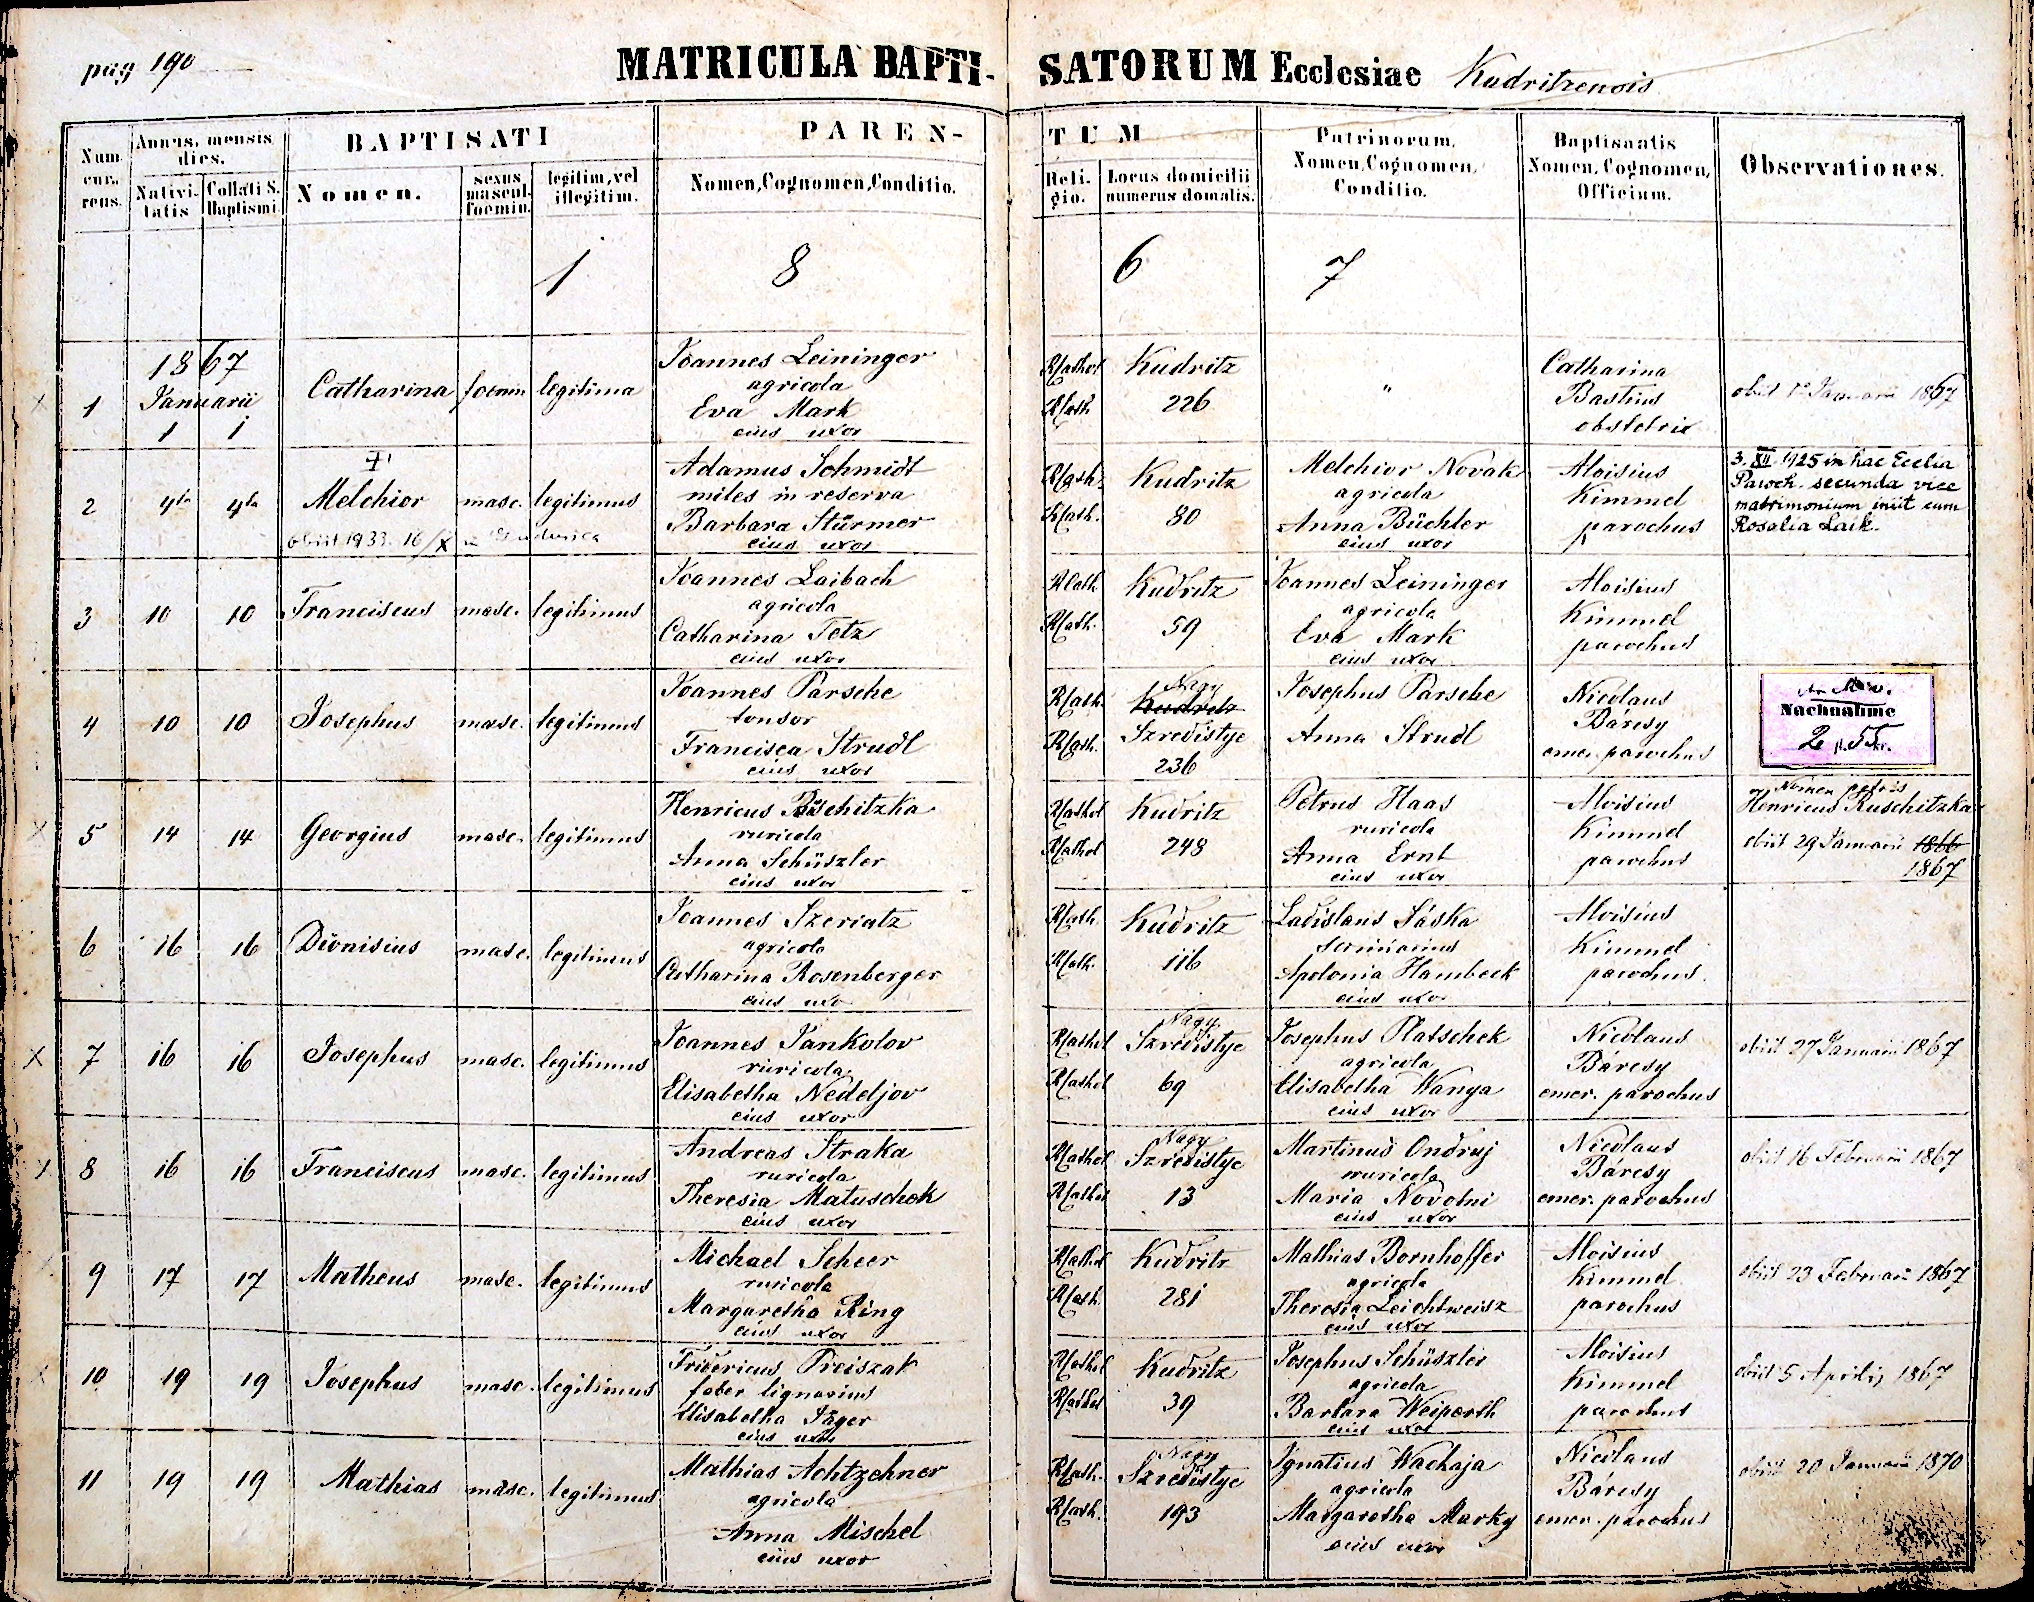 images/church_records/BIRTHS/1852-1870B/190